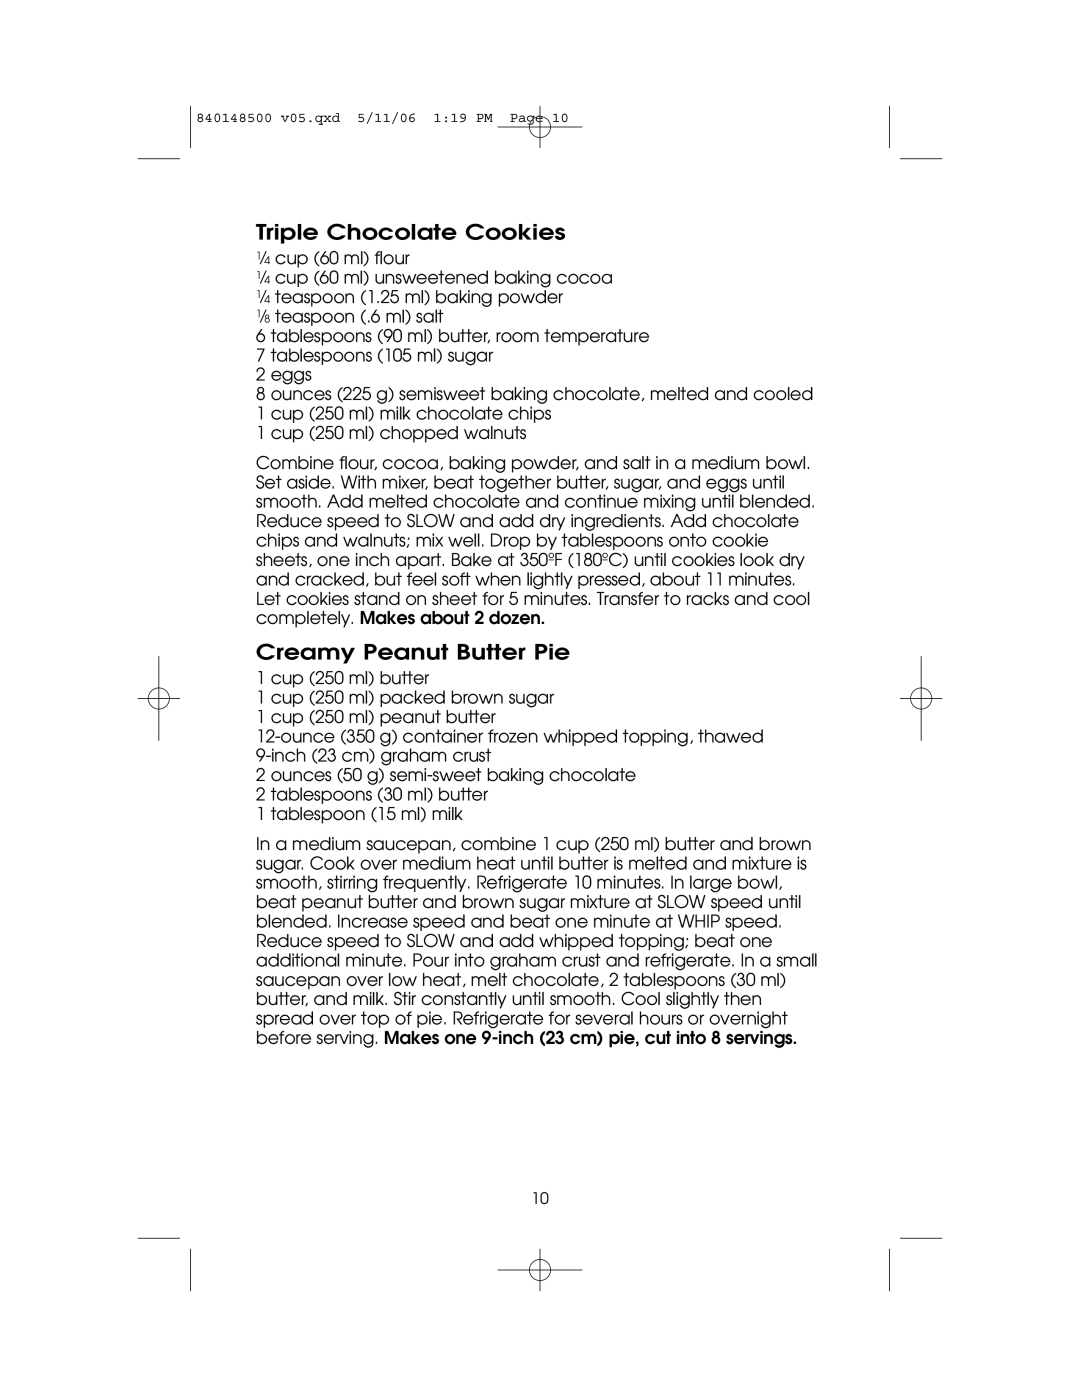 Hamilton Beach 840148500 owner manual Triple Chocolate Cookies, Creamy Peanut Butter Pie 